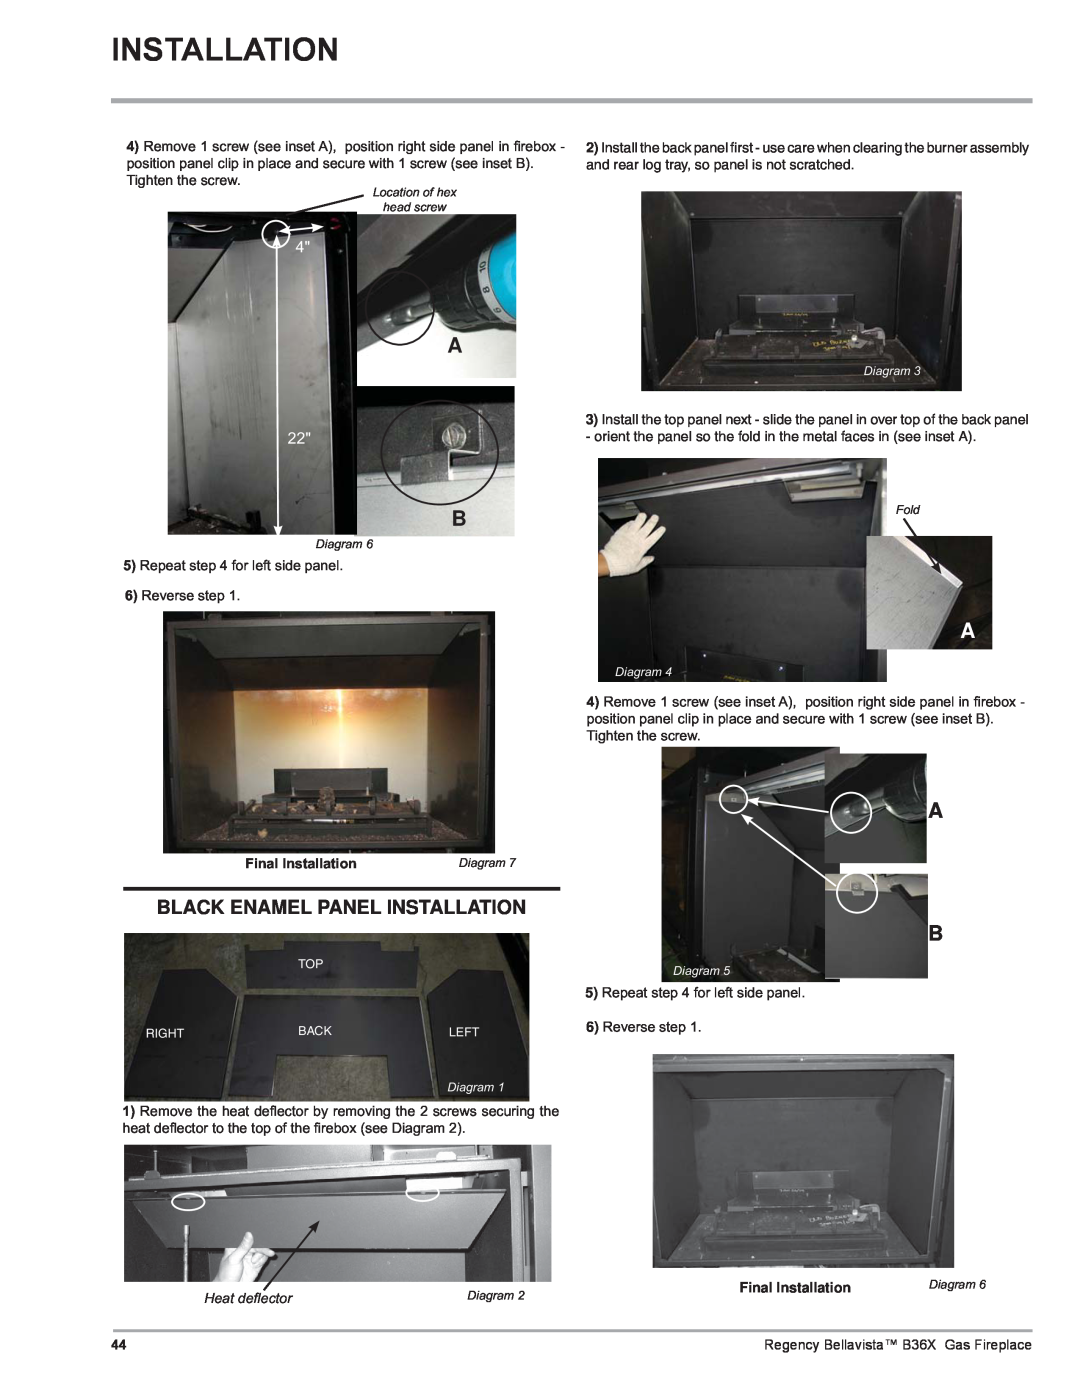 Regency B36X installation manual Black Enamel Panel Installation, Final Installation, Heat deﬂ ector 